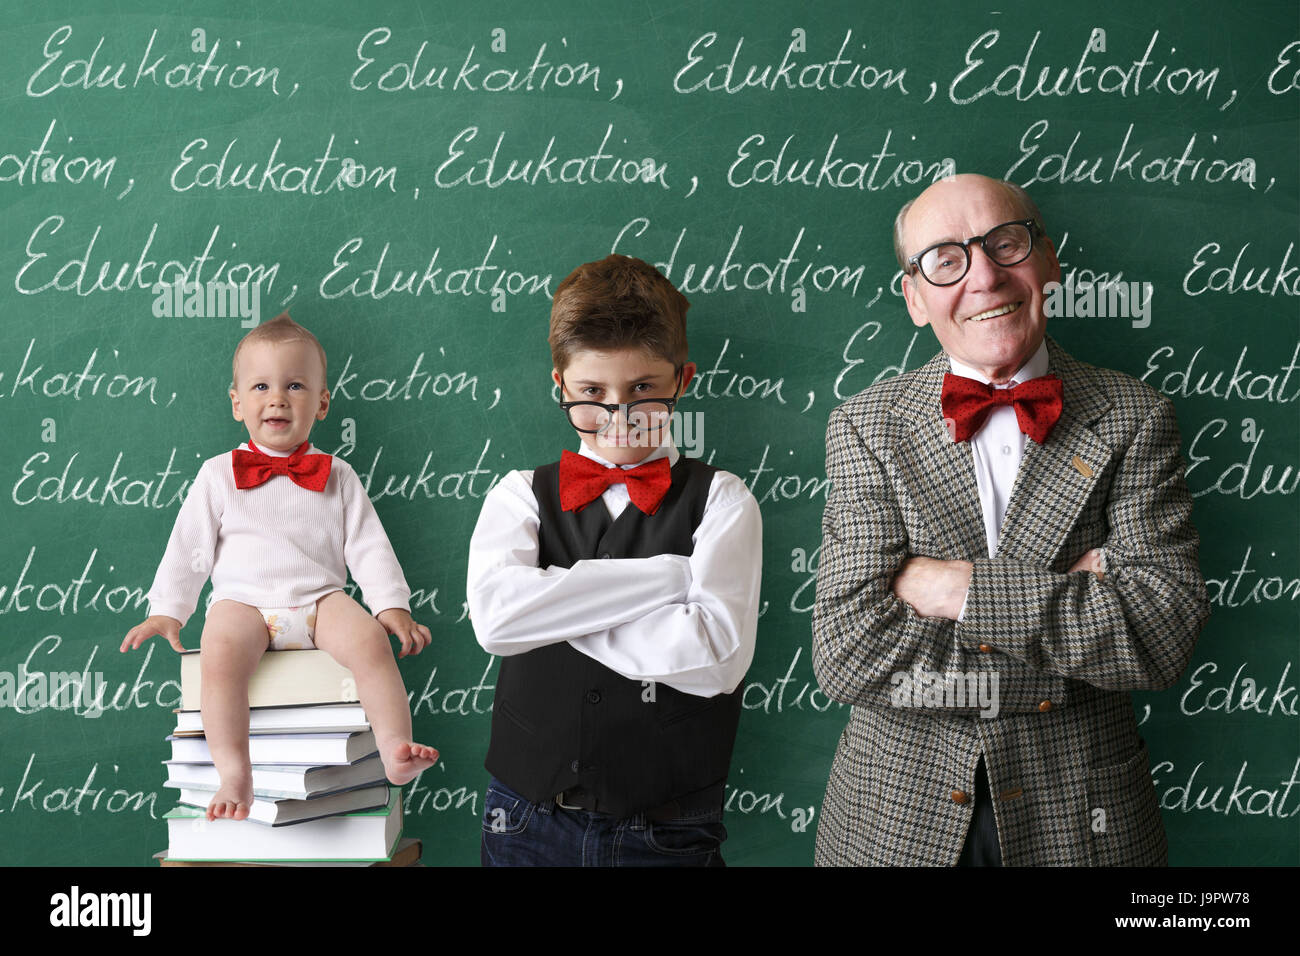 Infant,school child,professor,stand,School black board,stroke,'Edukation', Stock Photo